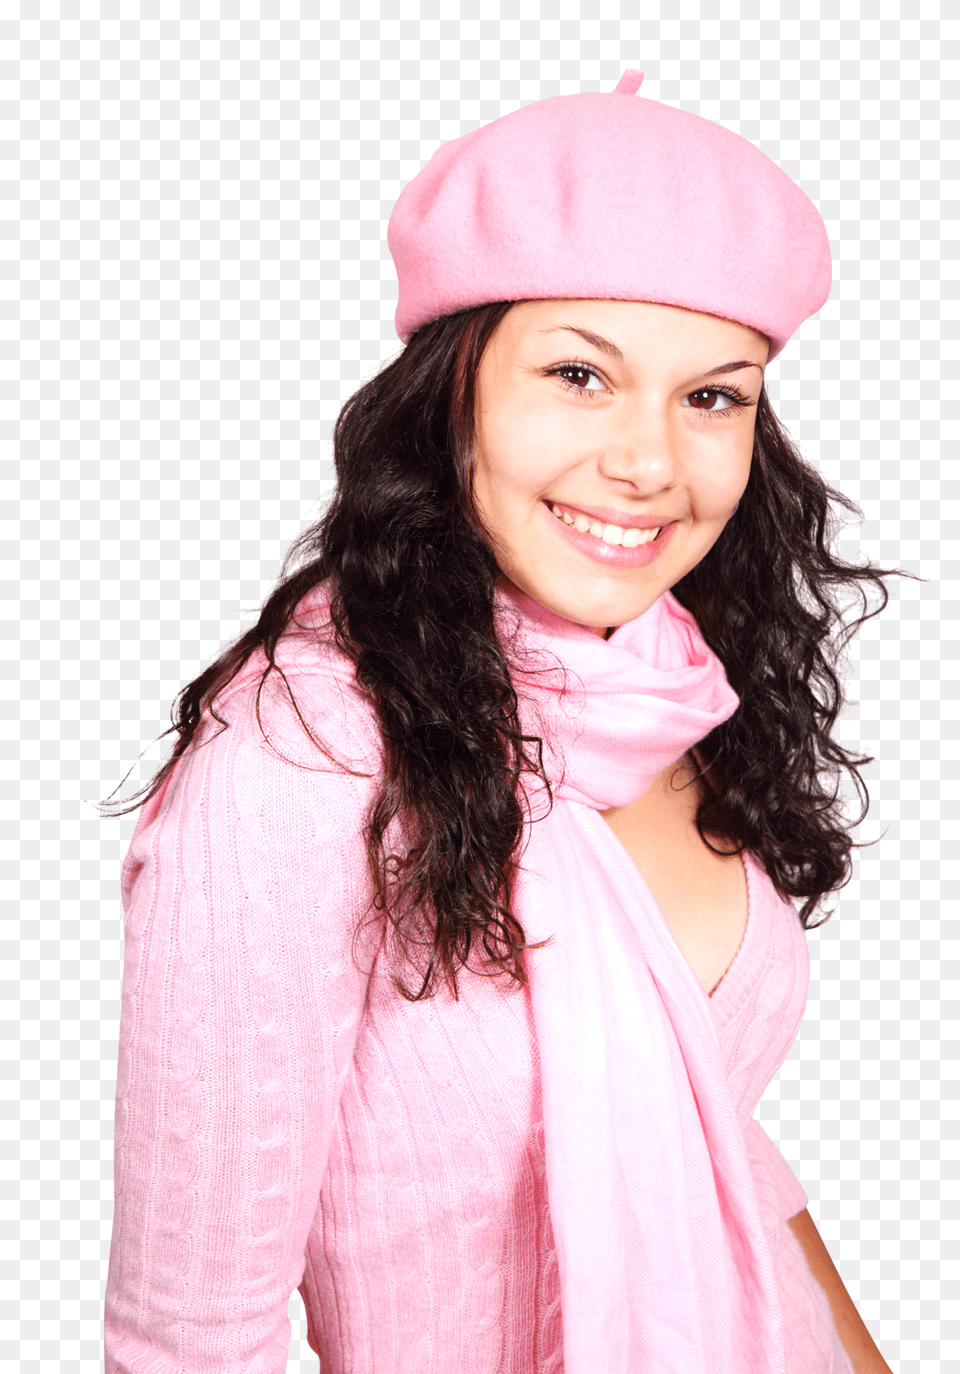 Pngpix Com Beautiful Girl In Pink Dress, Cap, Clothing, Hat, Adult Free Transparent Png